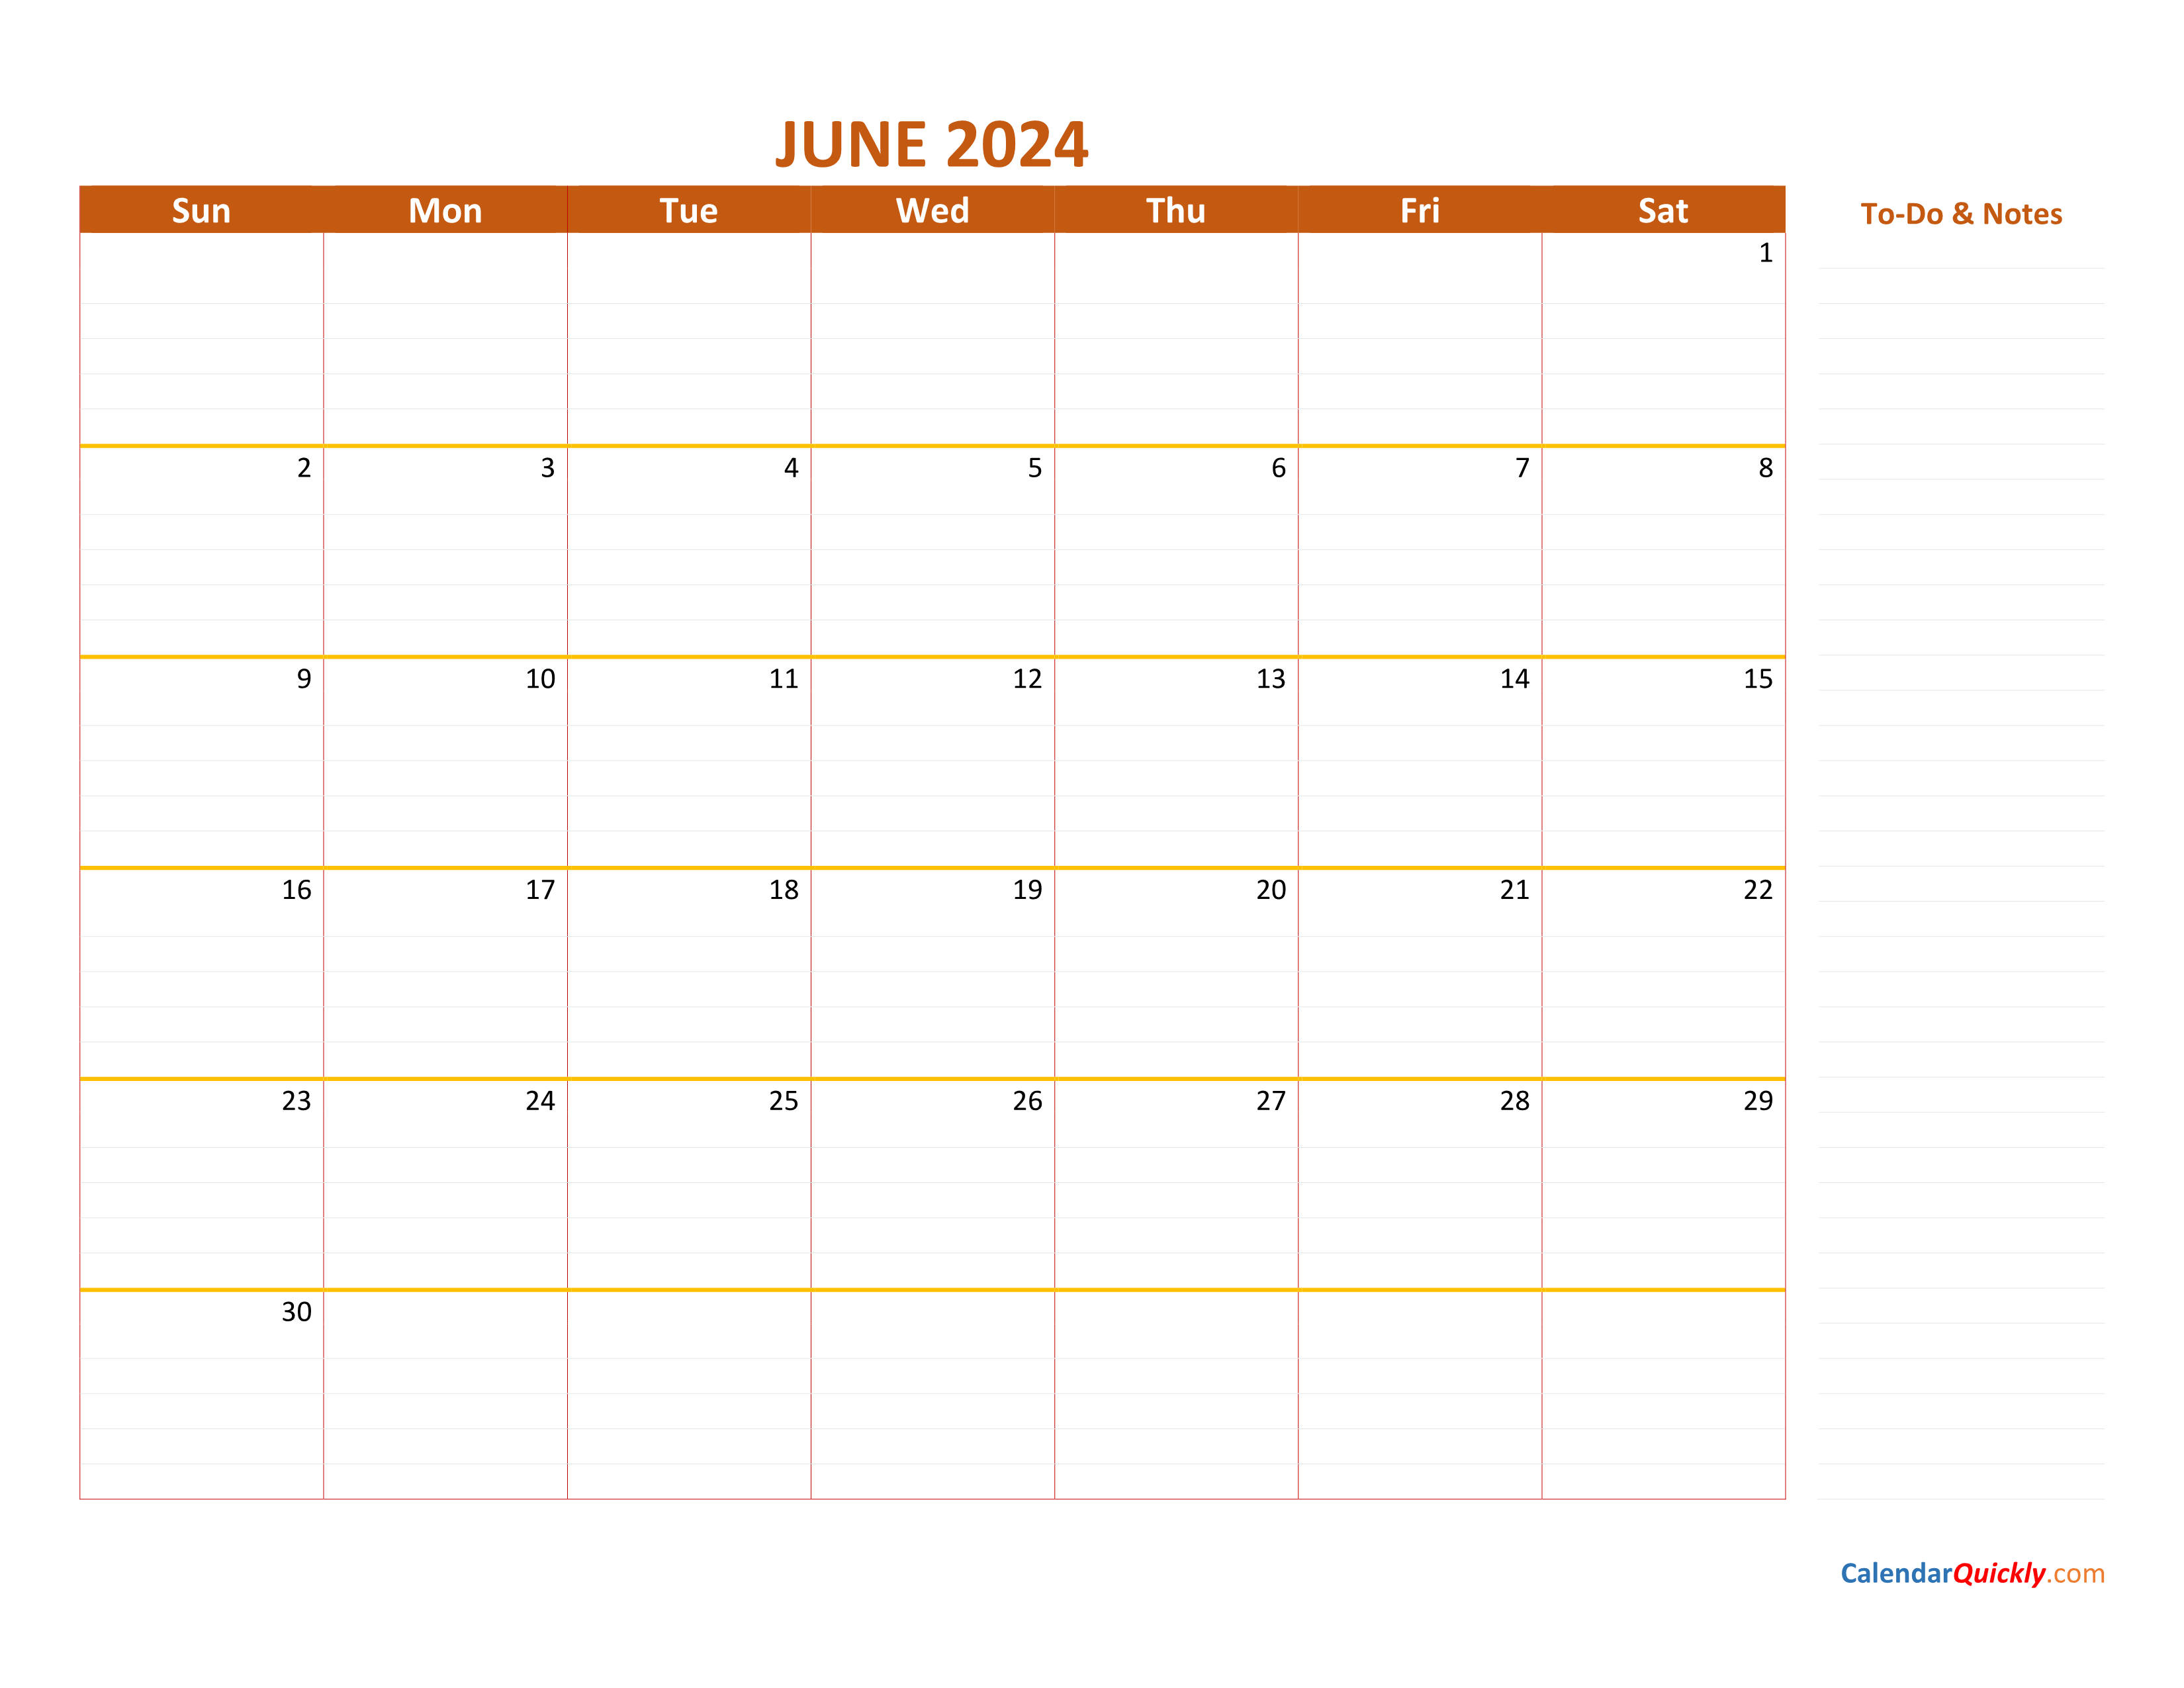 june-2024-calendar-calendar-quickly